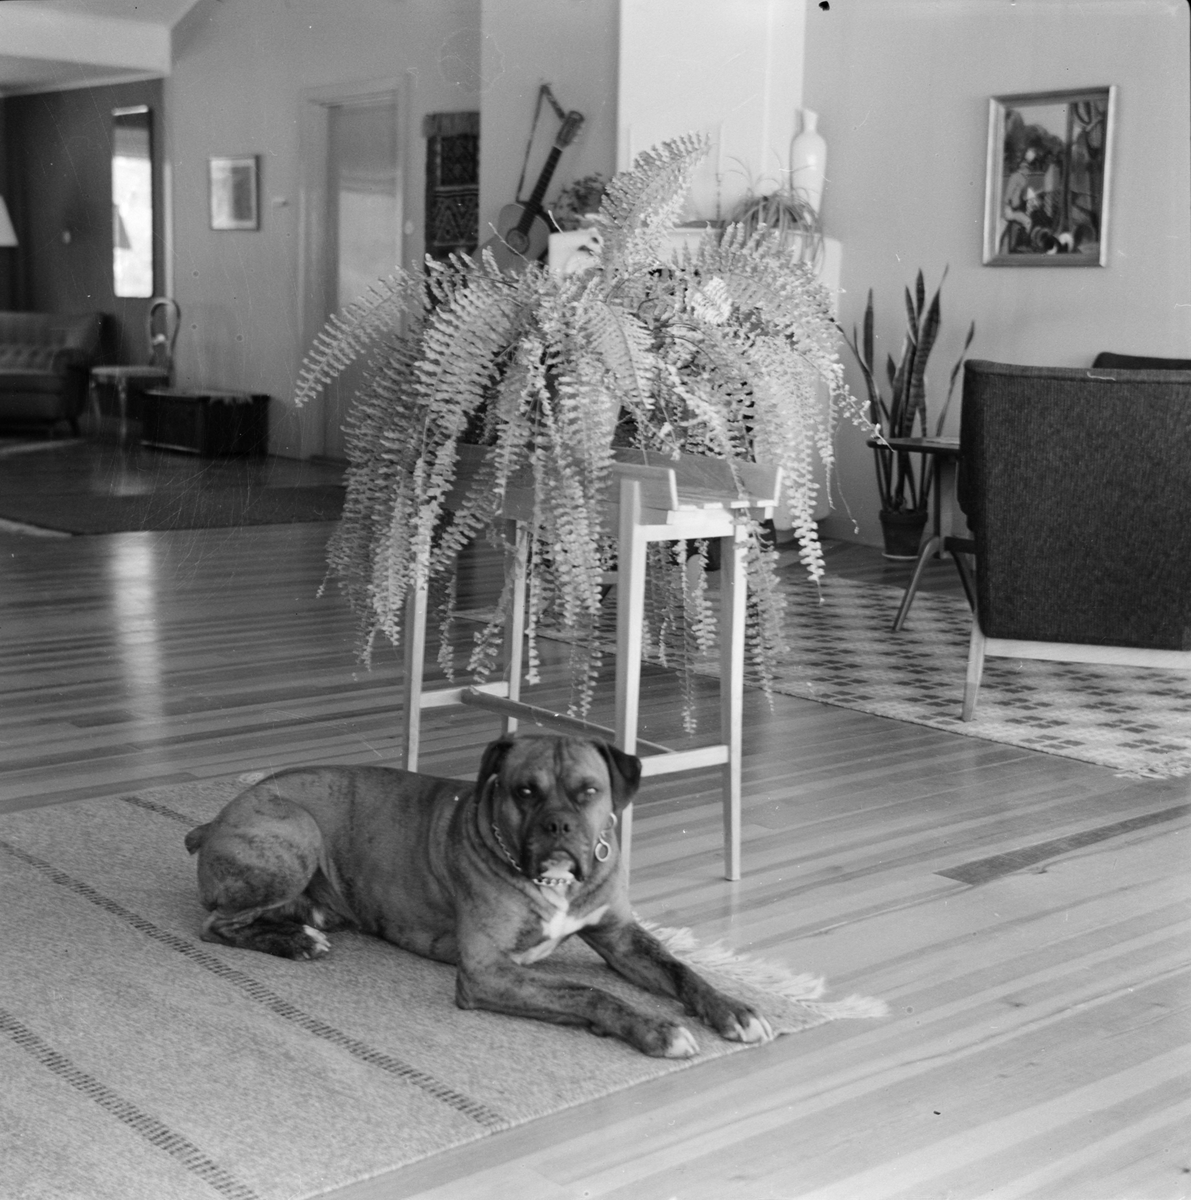 Fotograf Gunnar Sundgrens hund Klumpen, Fagerudds Semesterhem, Fagerudd, Uppland 1961